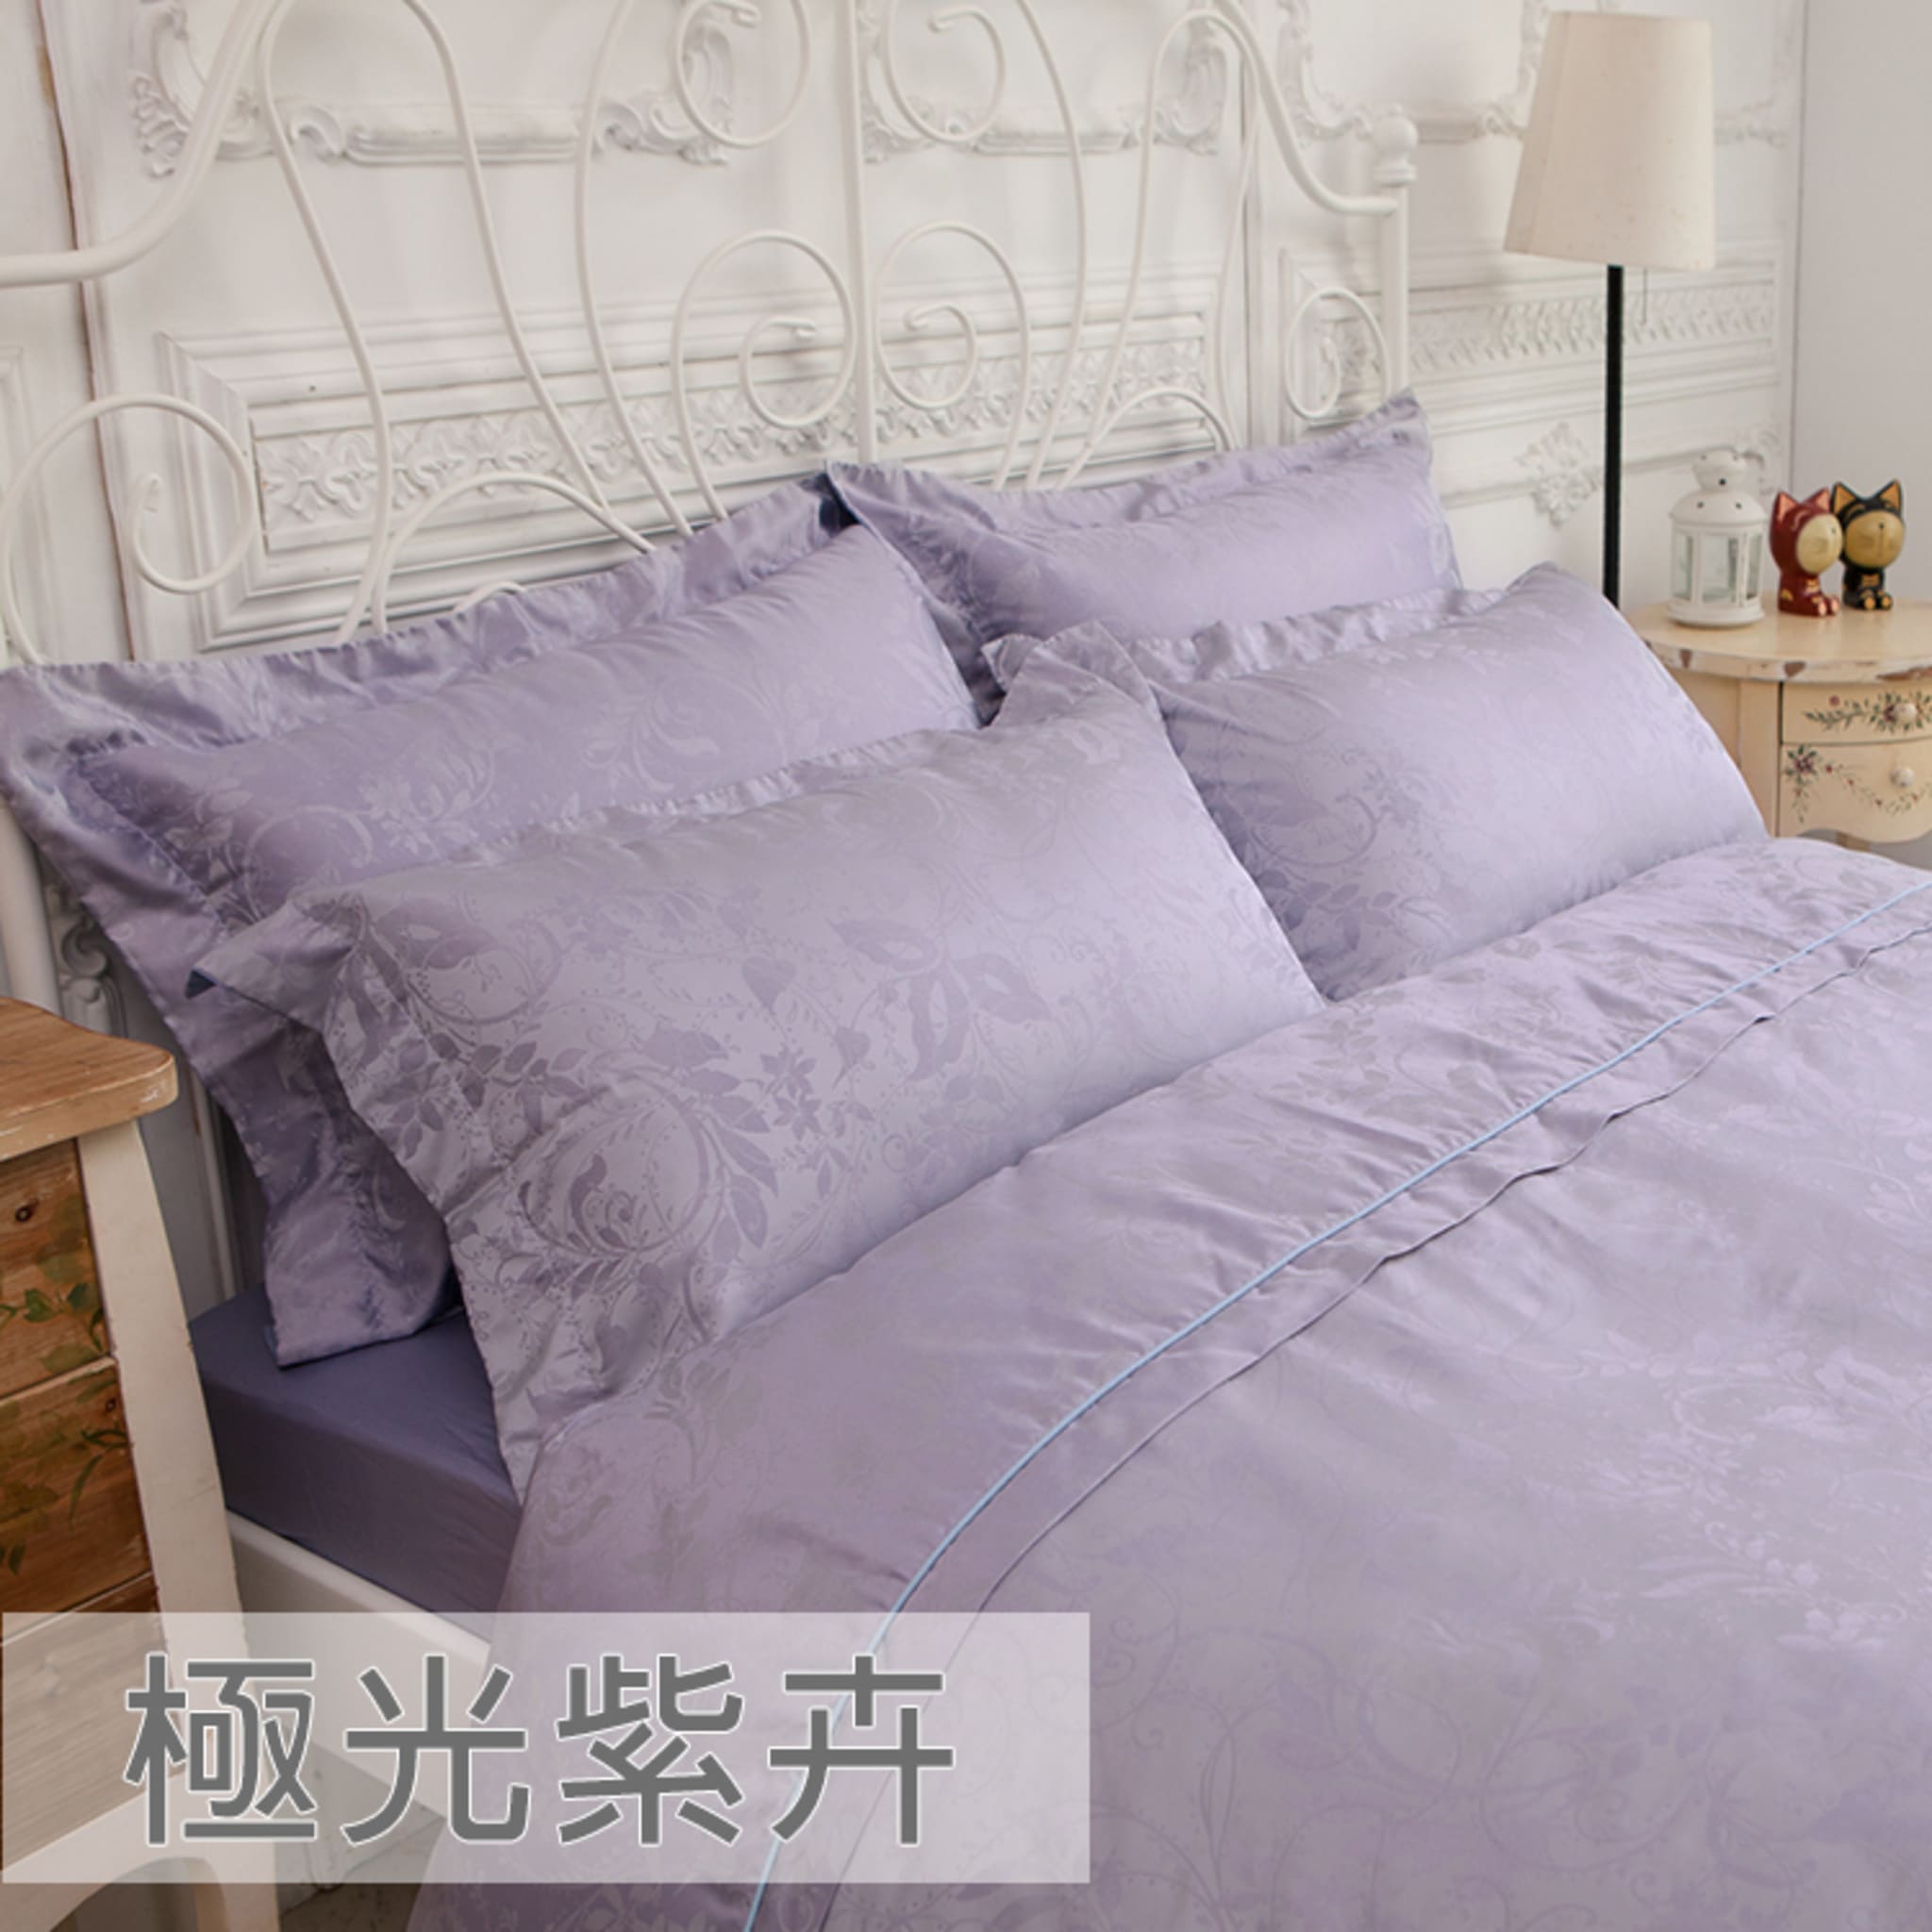 Fotex【緹花】雙人床包組 - 極光紫卉